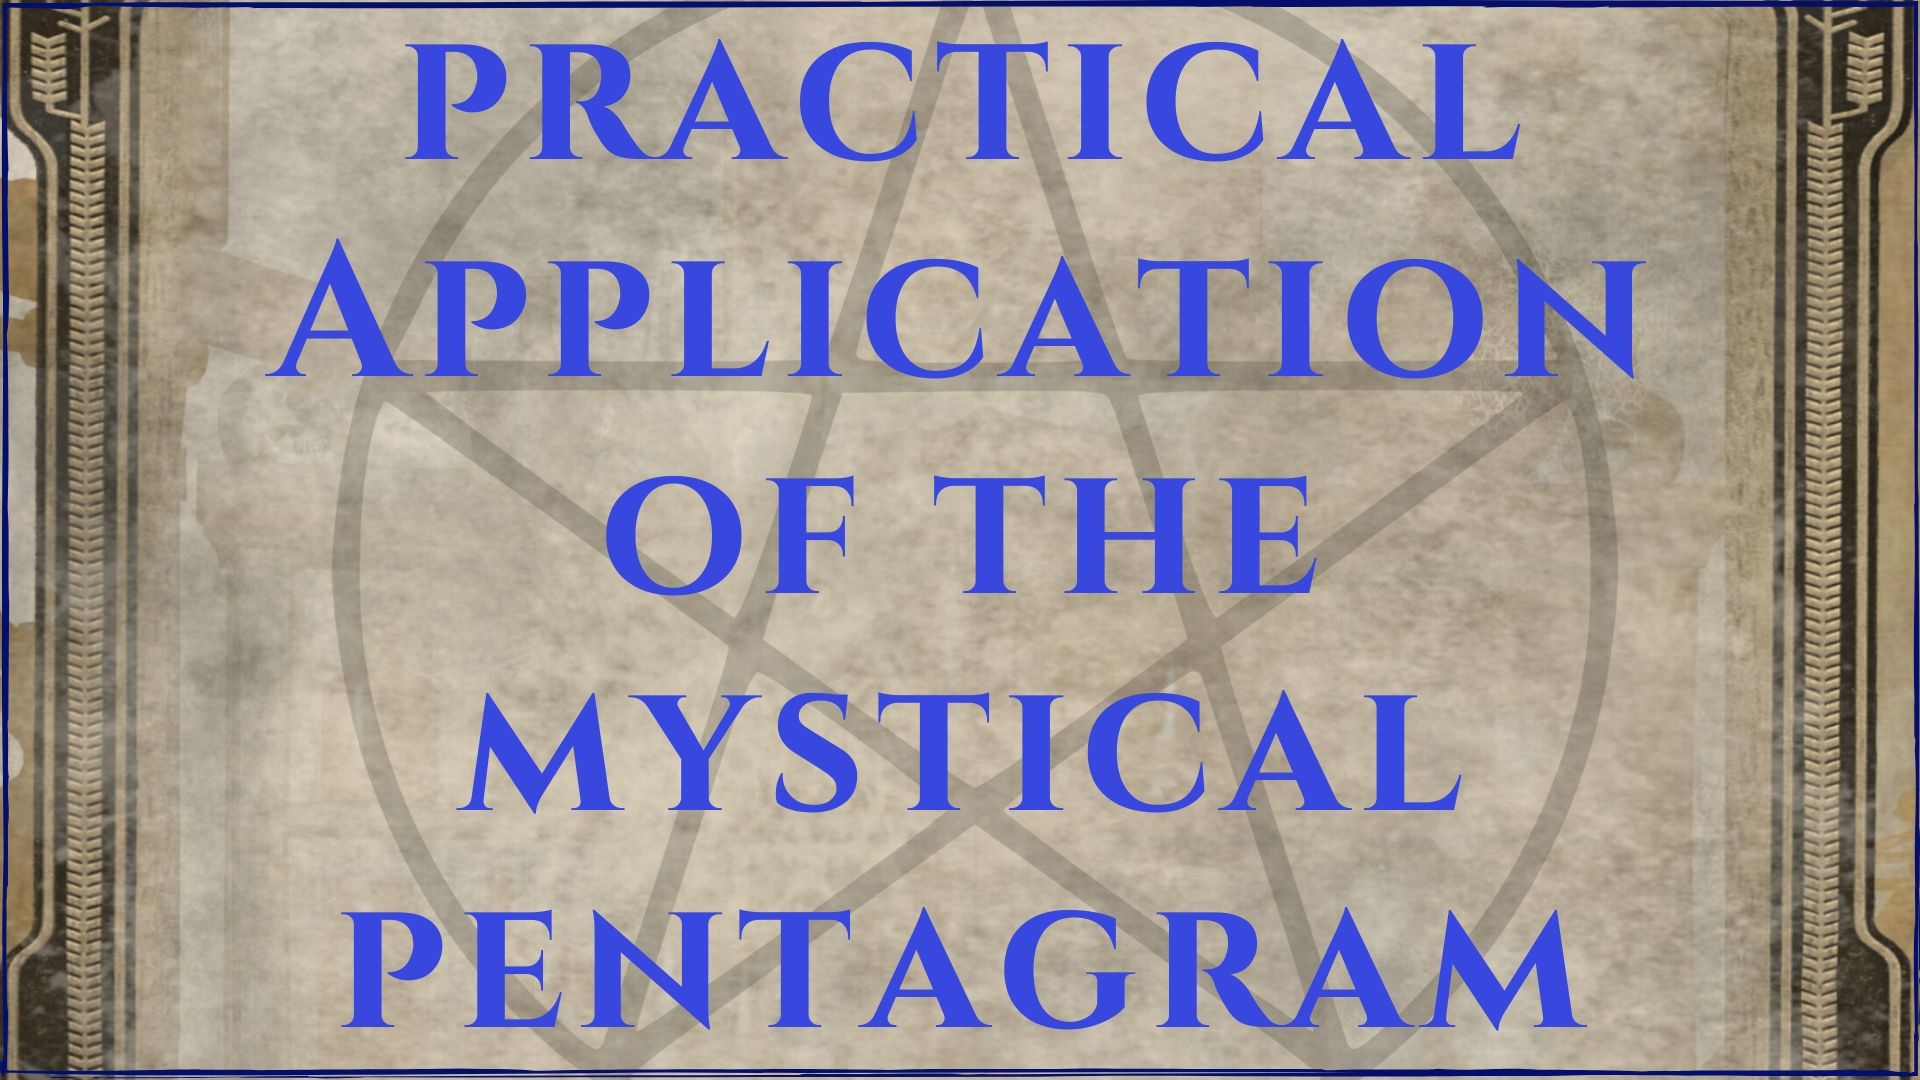 Mystical Pentagram